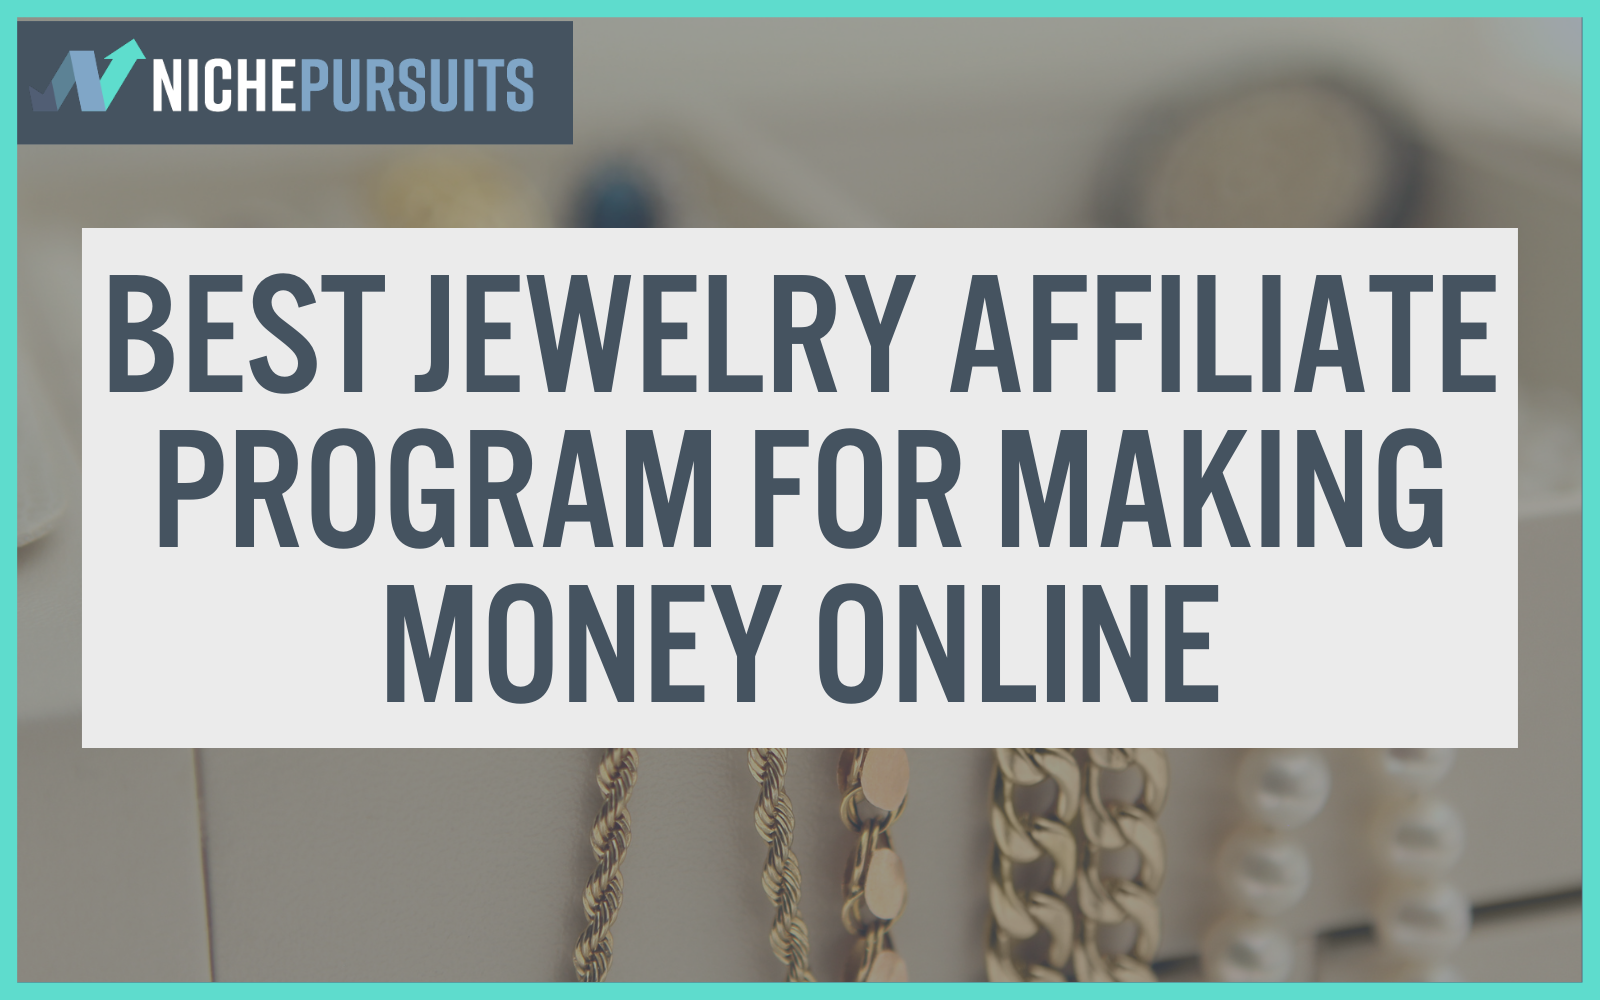 17 Best Jewelry Affiliate Program for Making Money Online | Niche Pursuits